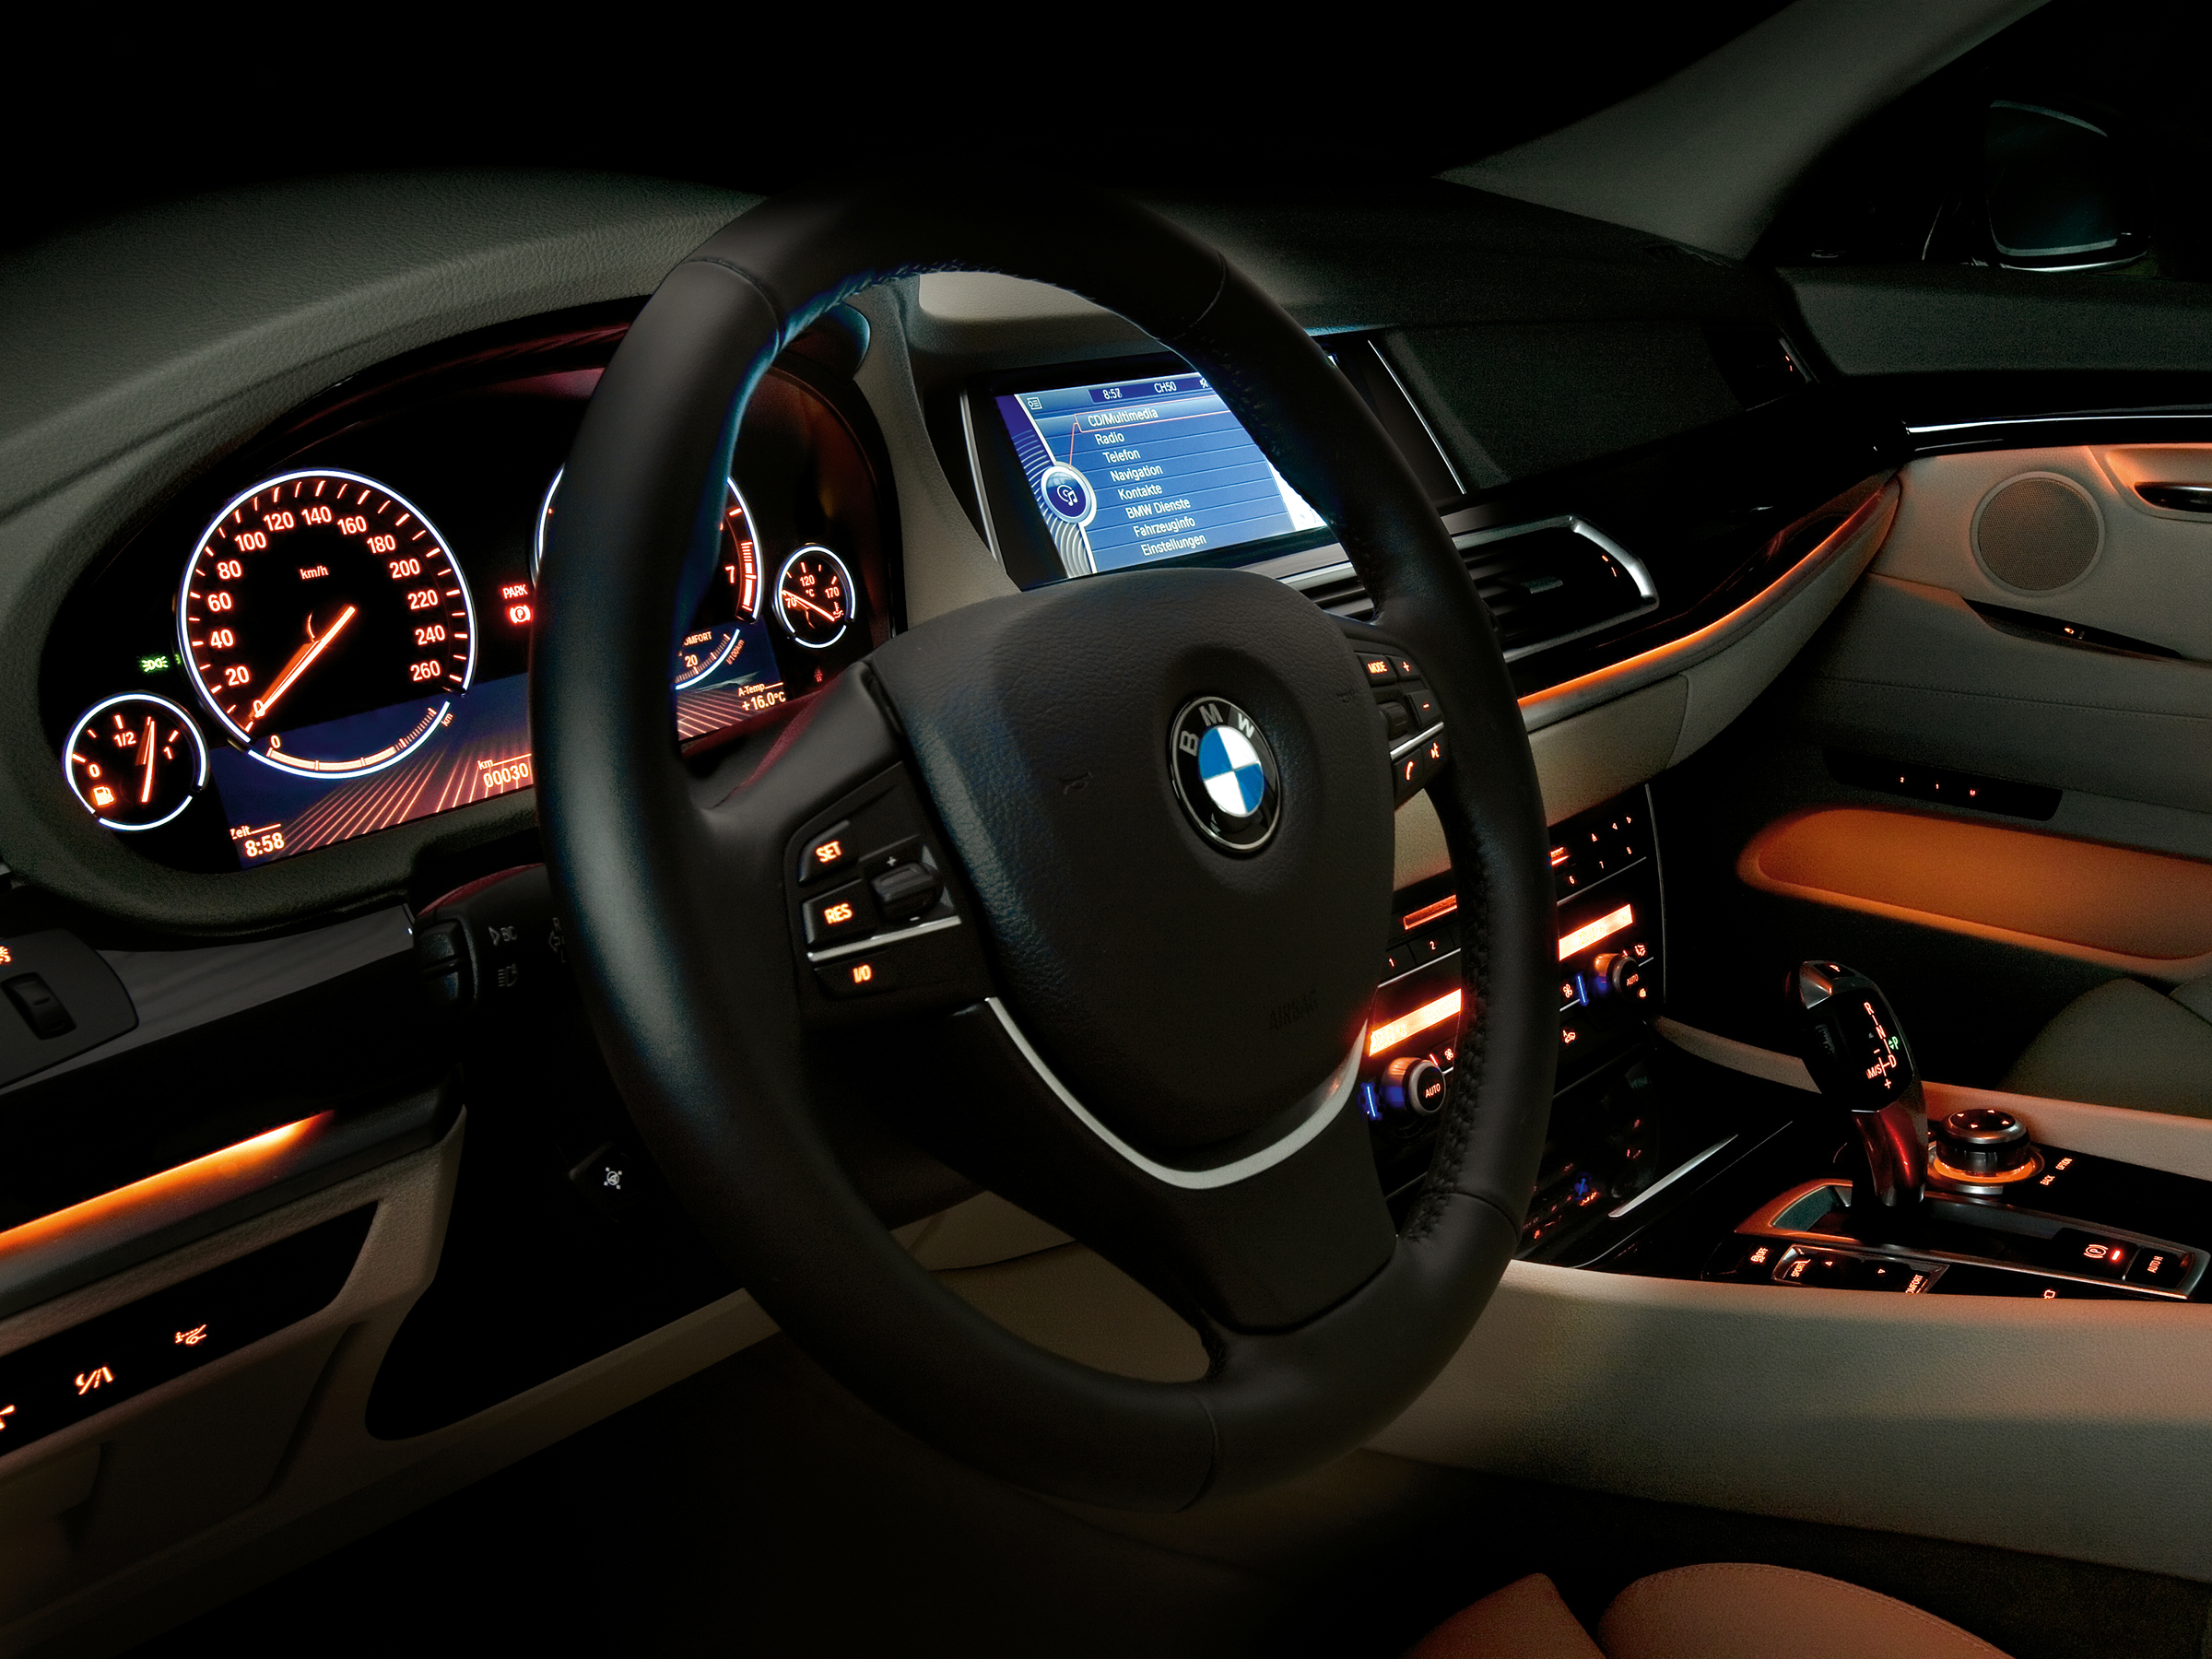 BMW, cars, car interiors - desktop wallpaper